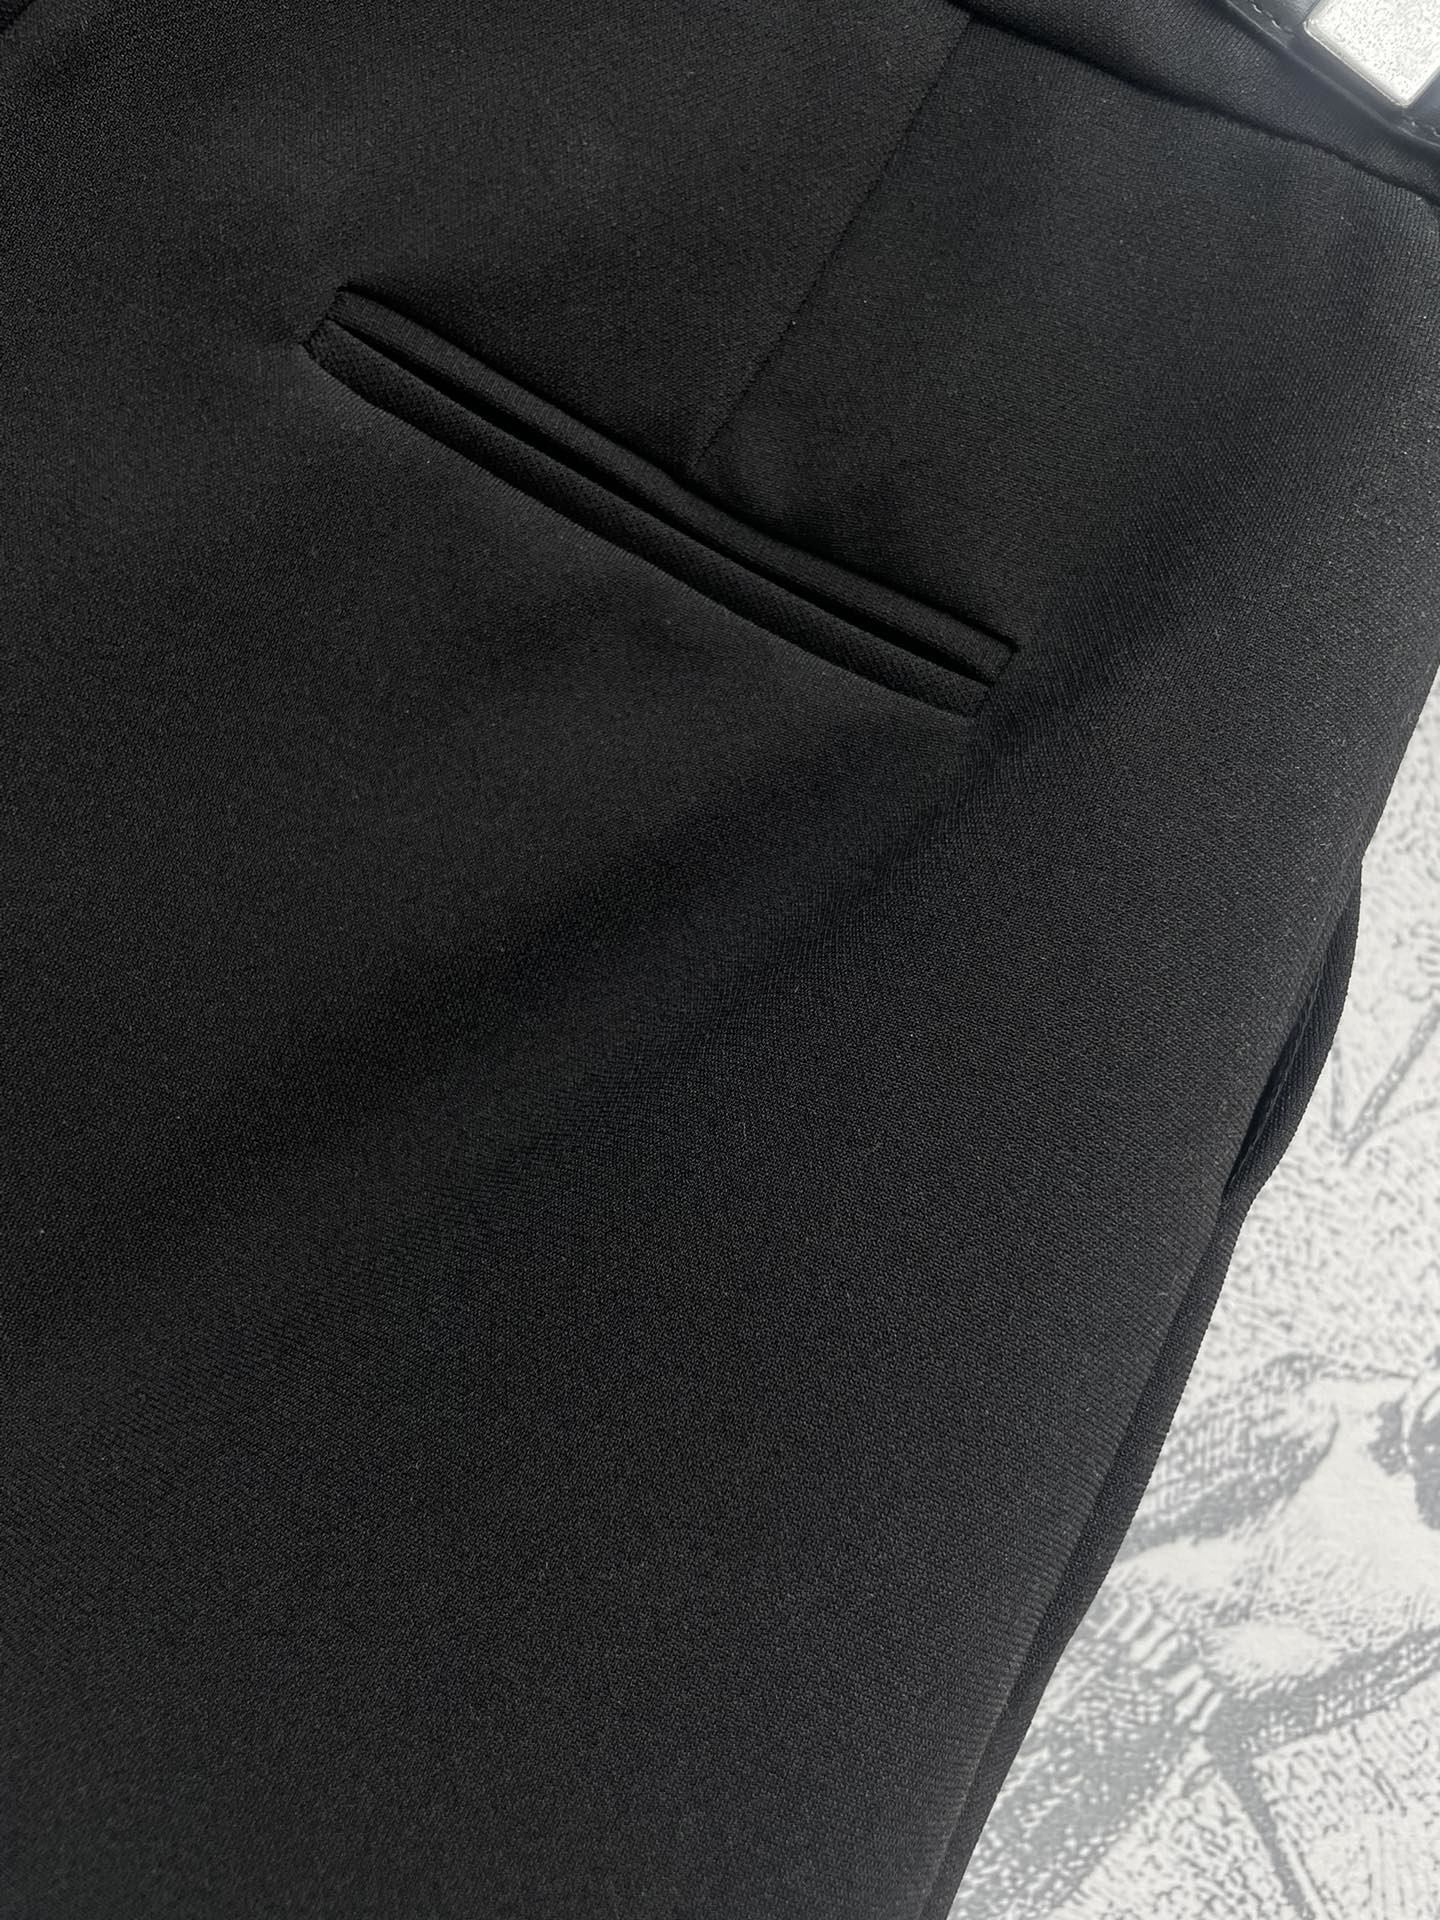 SLP春夏金属logo腰带短裤一条版型巨好的高腰短裤显得腿chao细长随便搭配就能凹出漫画感线条腿搭配定